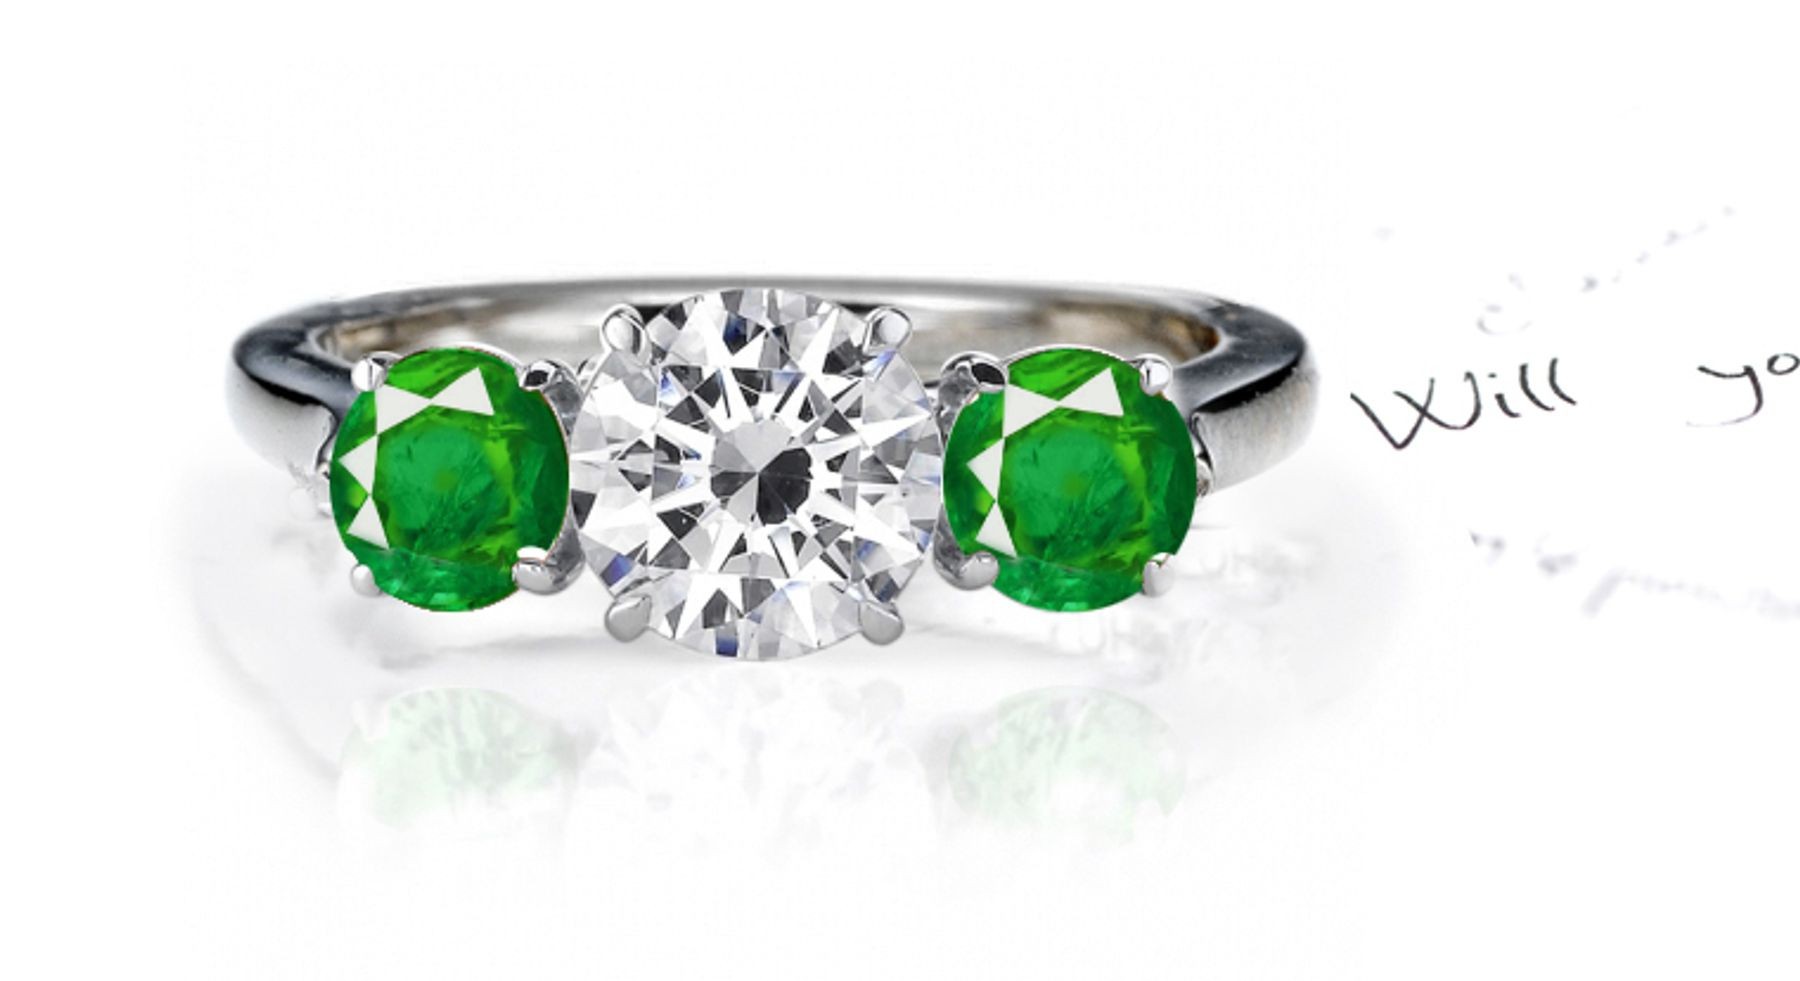 Specially Designed: New! Gorgeous True Emerald & Diamond Three-Stone Ring in 14k White Gold & Platinum